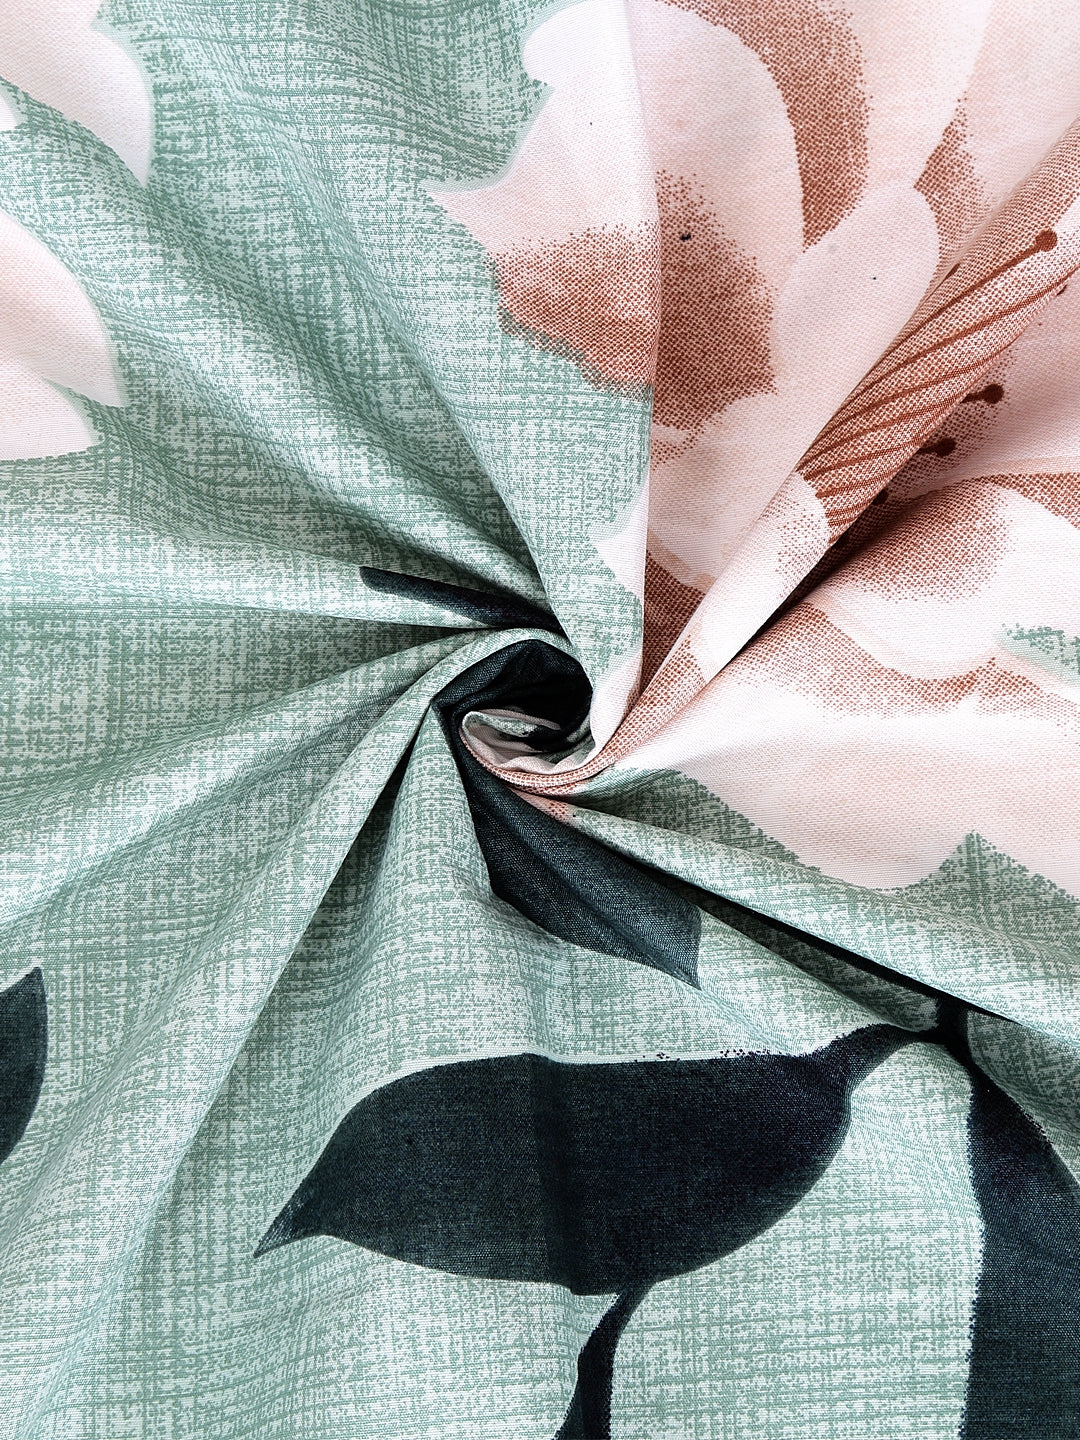 Arrabi Green Floral TC Polycotton Single Size Bedsheet with 1 Pillow Cover (225 x 150 cm)